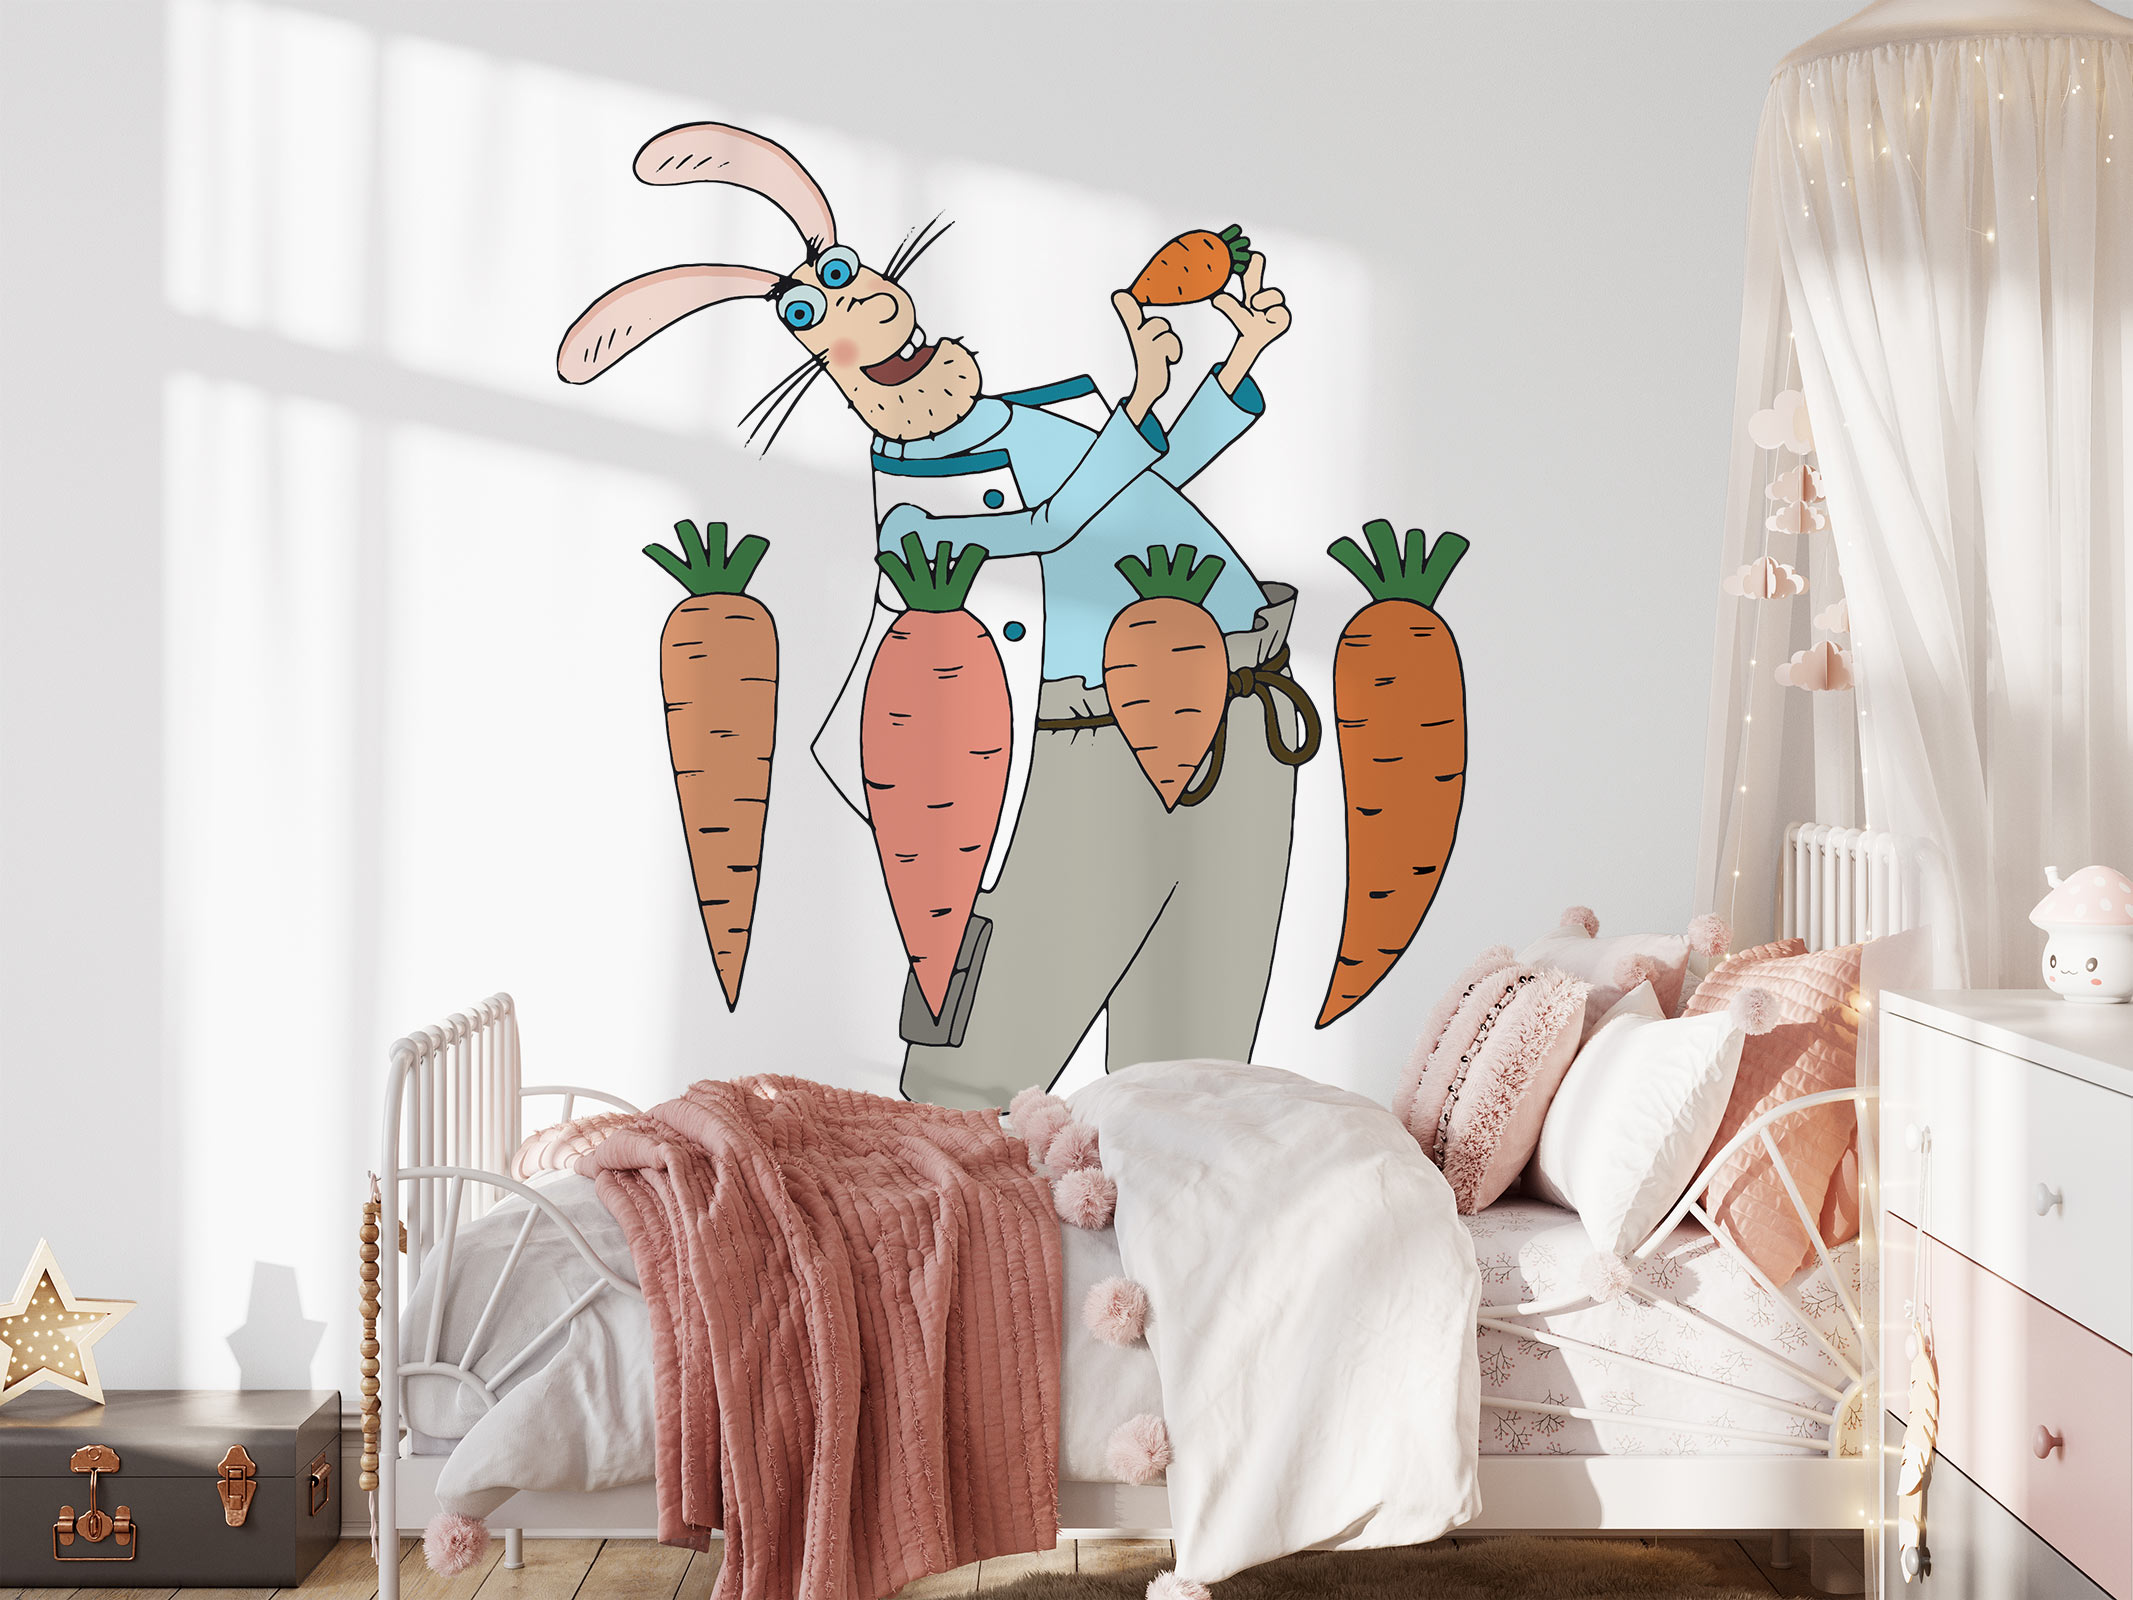 Adalbert the Rabbit and Carrots